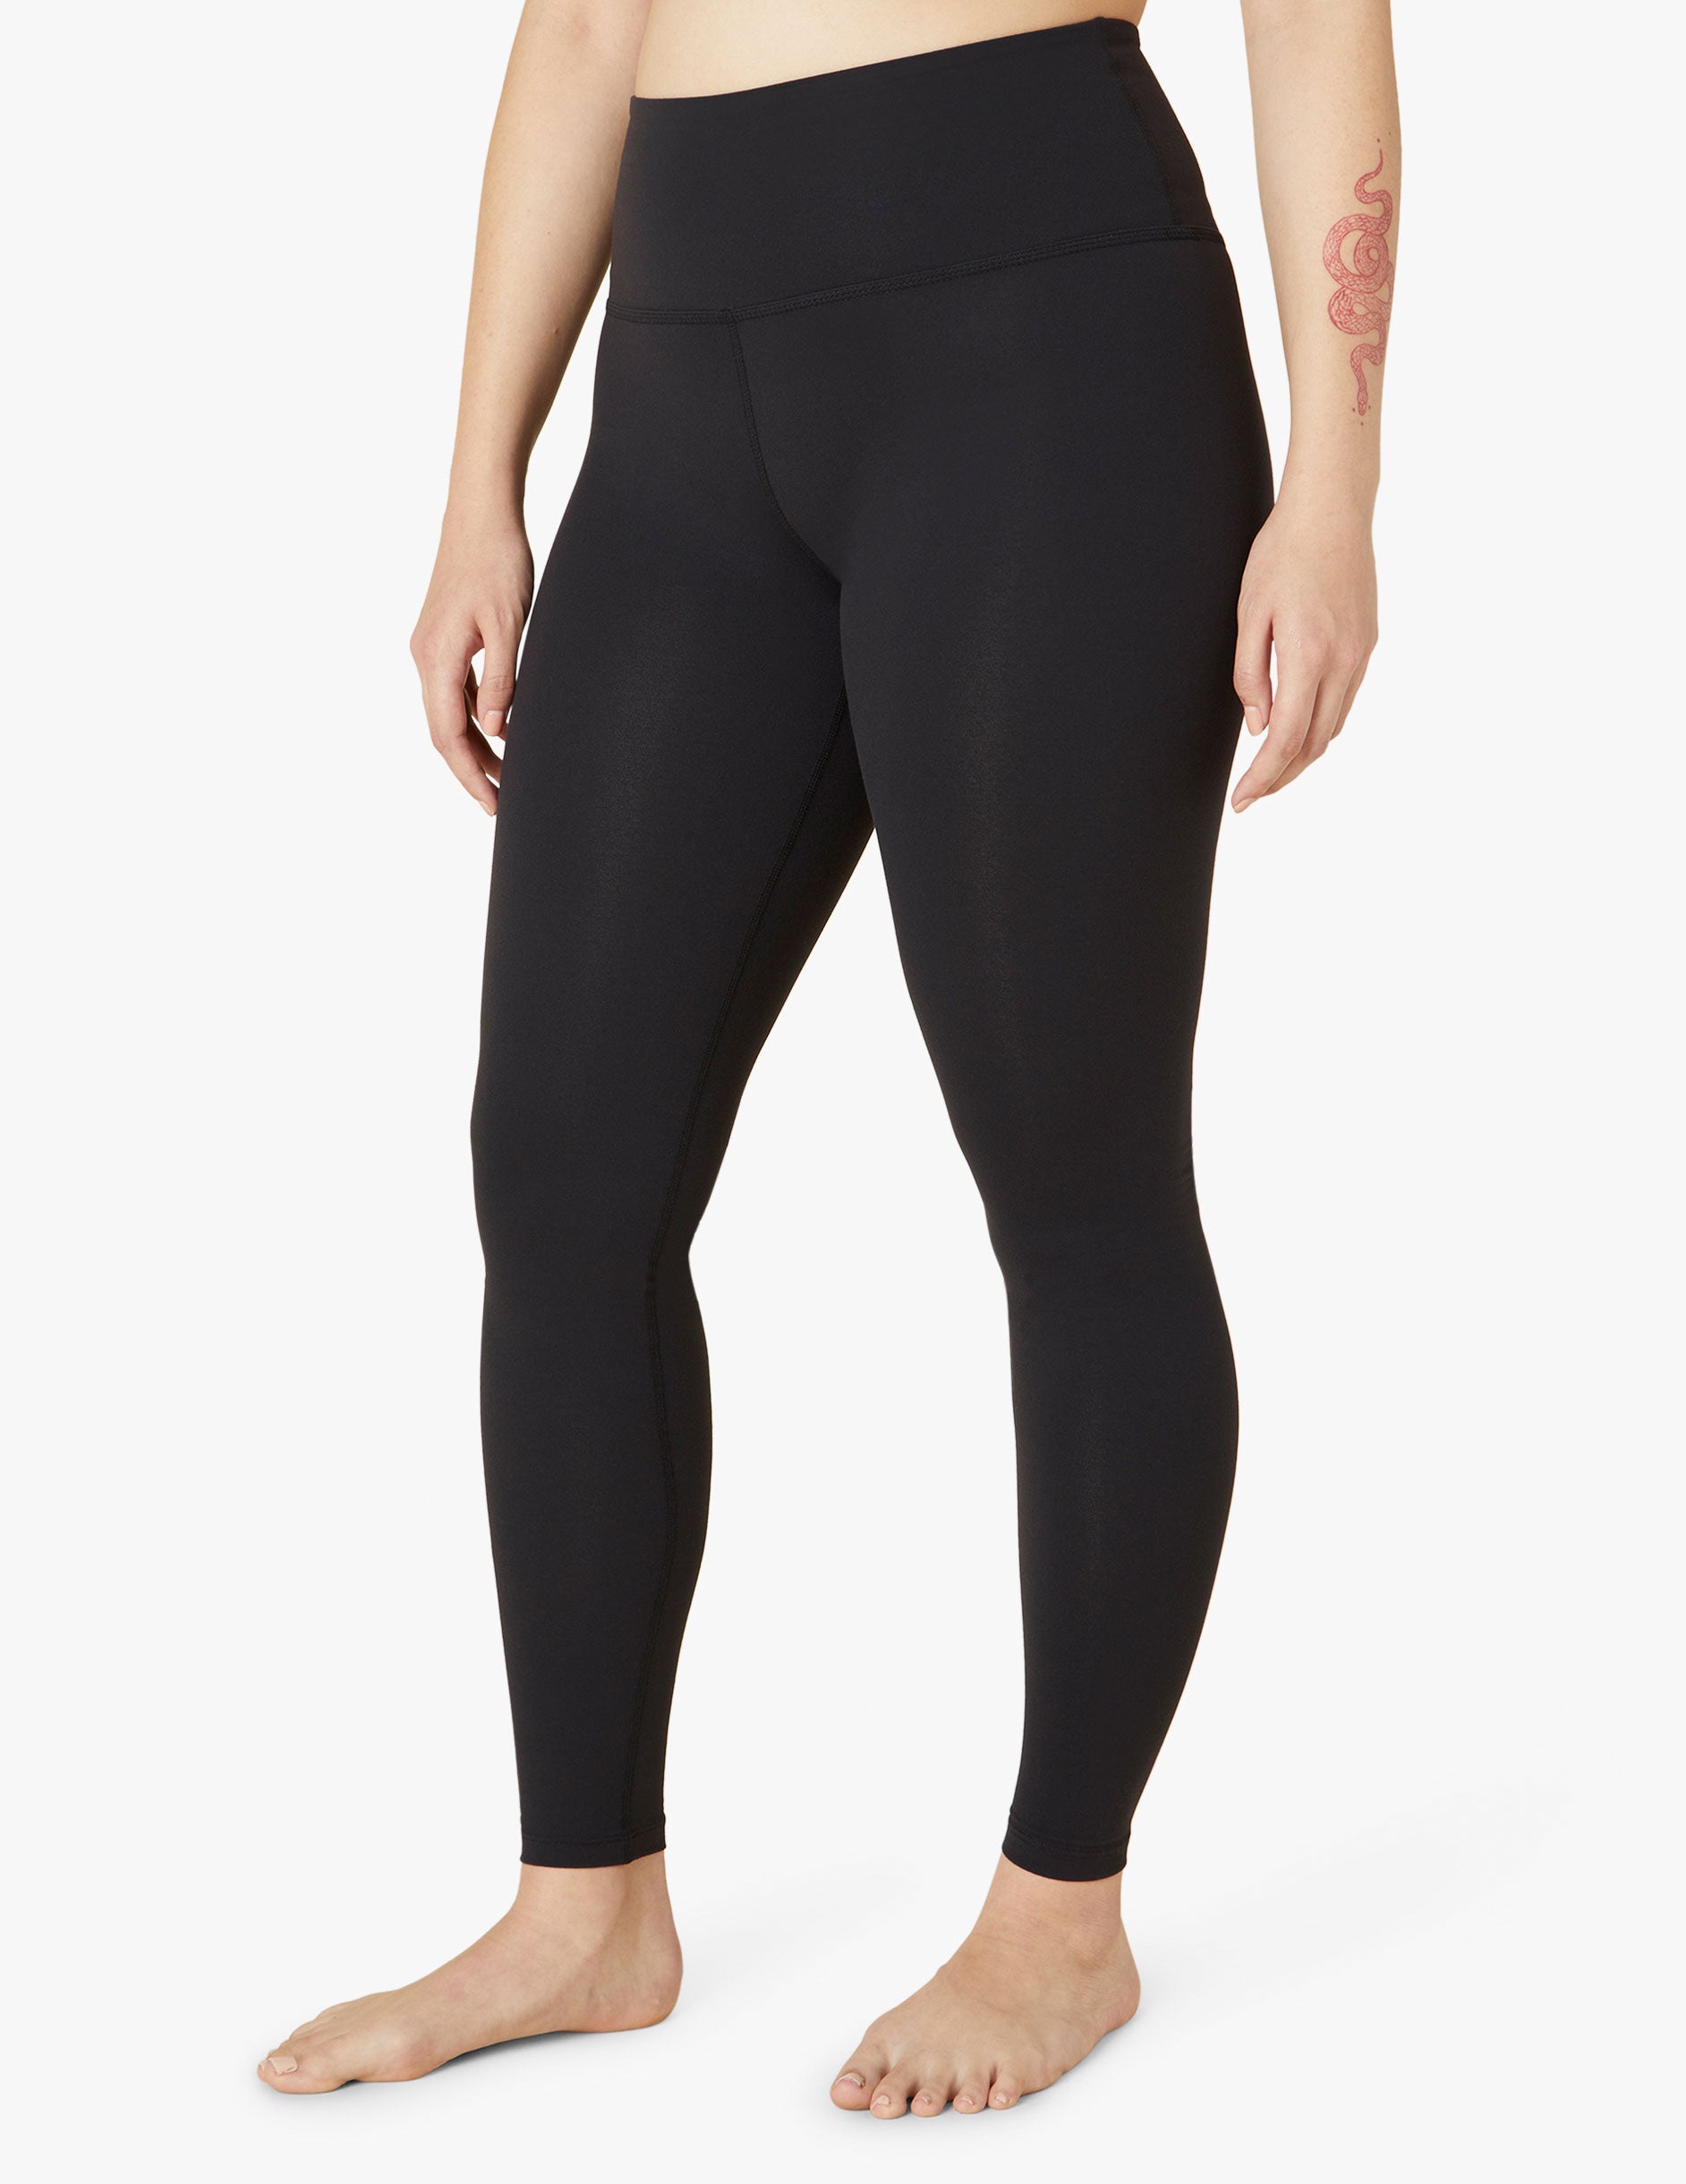 1 Pcs High Waisted Yoga Pants Women's Leggings With Pockets,xl,black